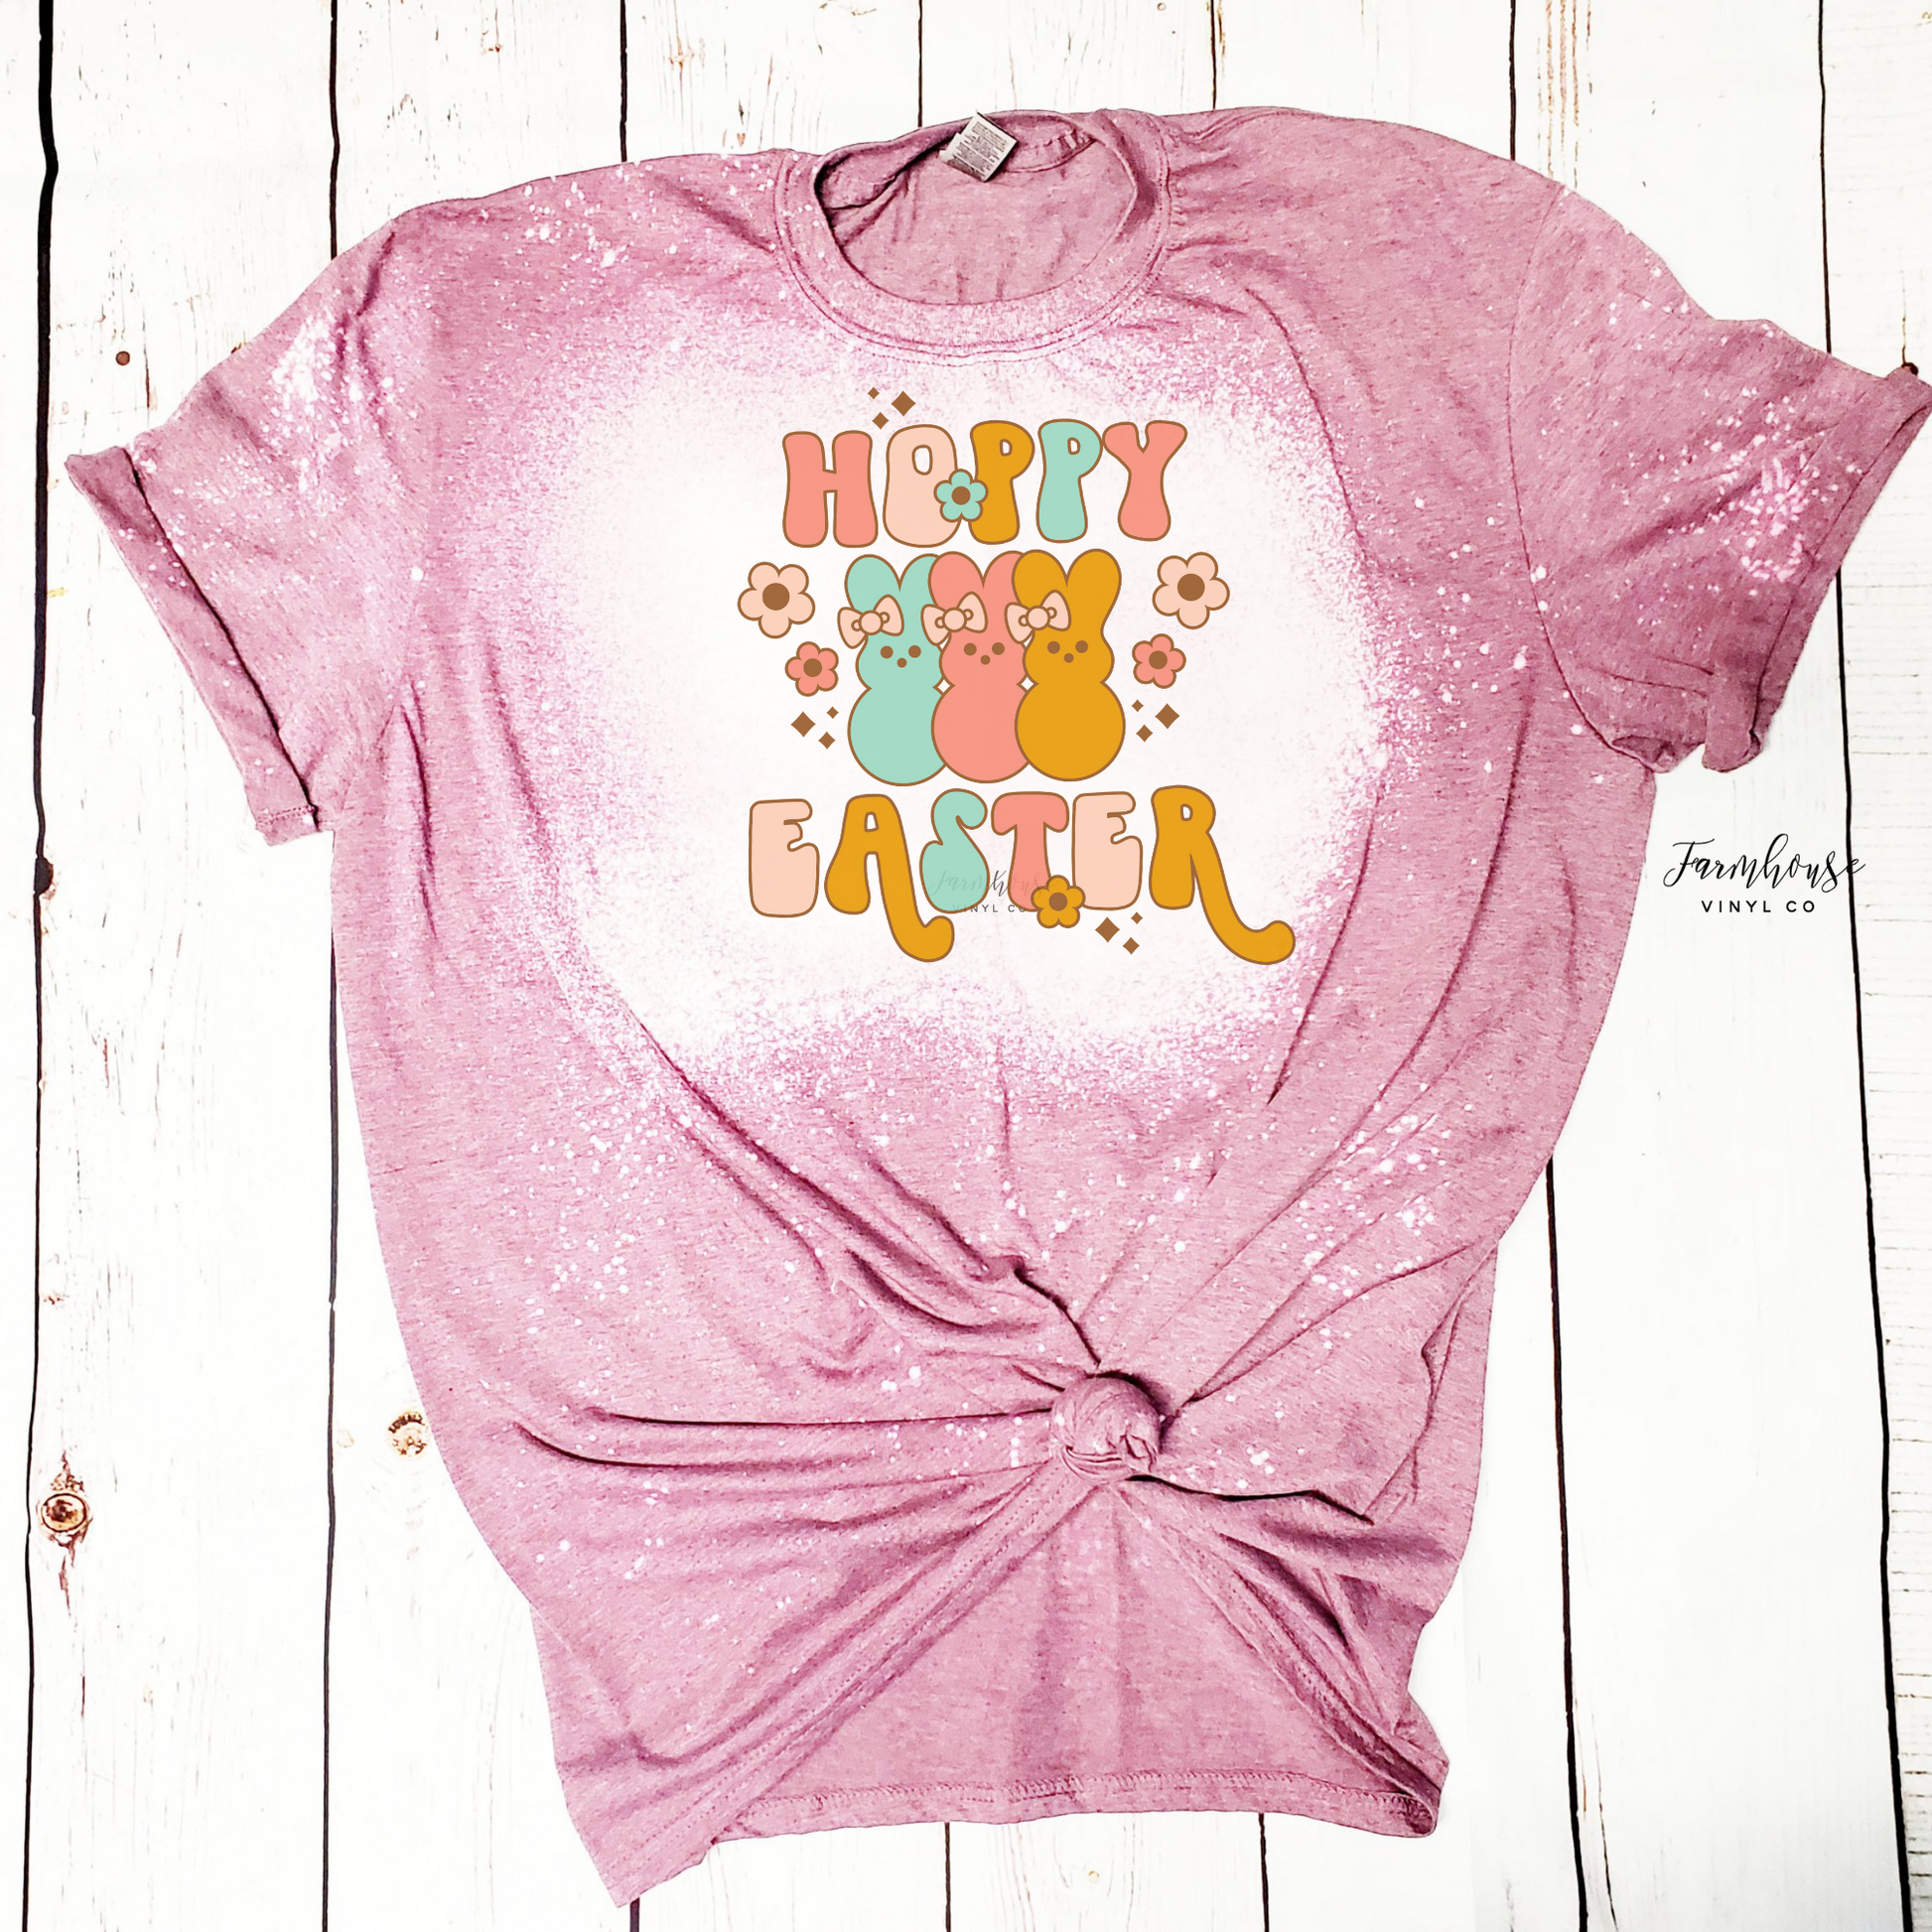 Hoppy Easter Bleached Shirt - Farmhouse Vinyl Co